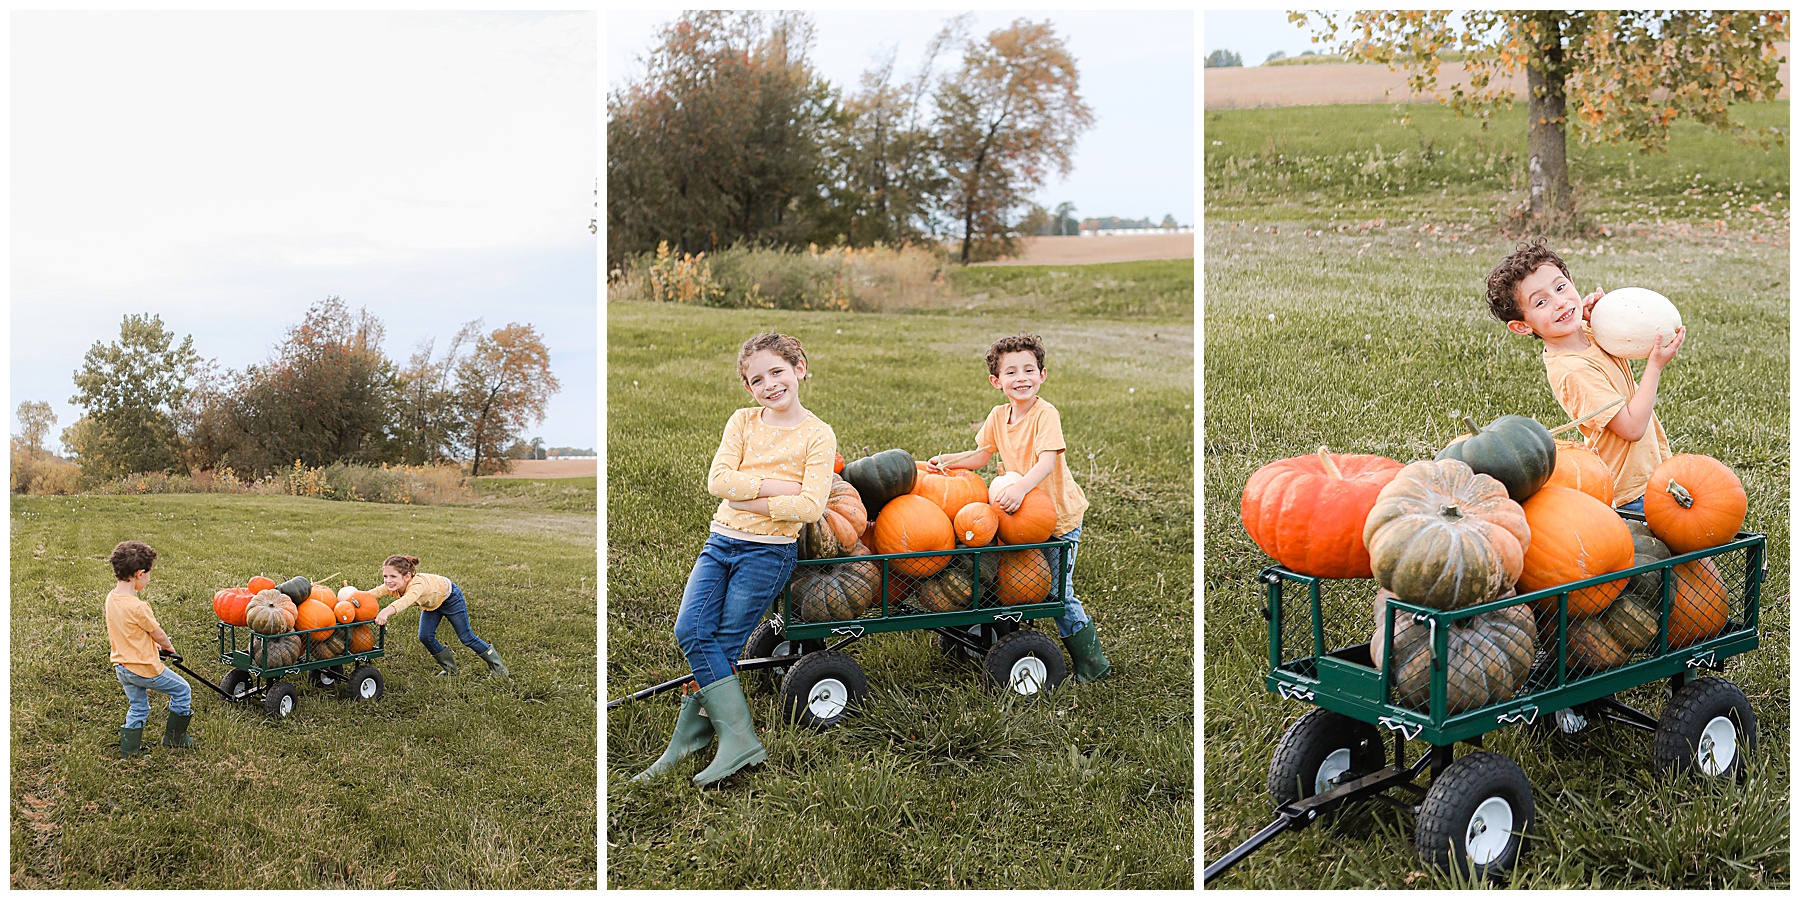 Harvesting pumpkins